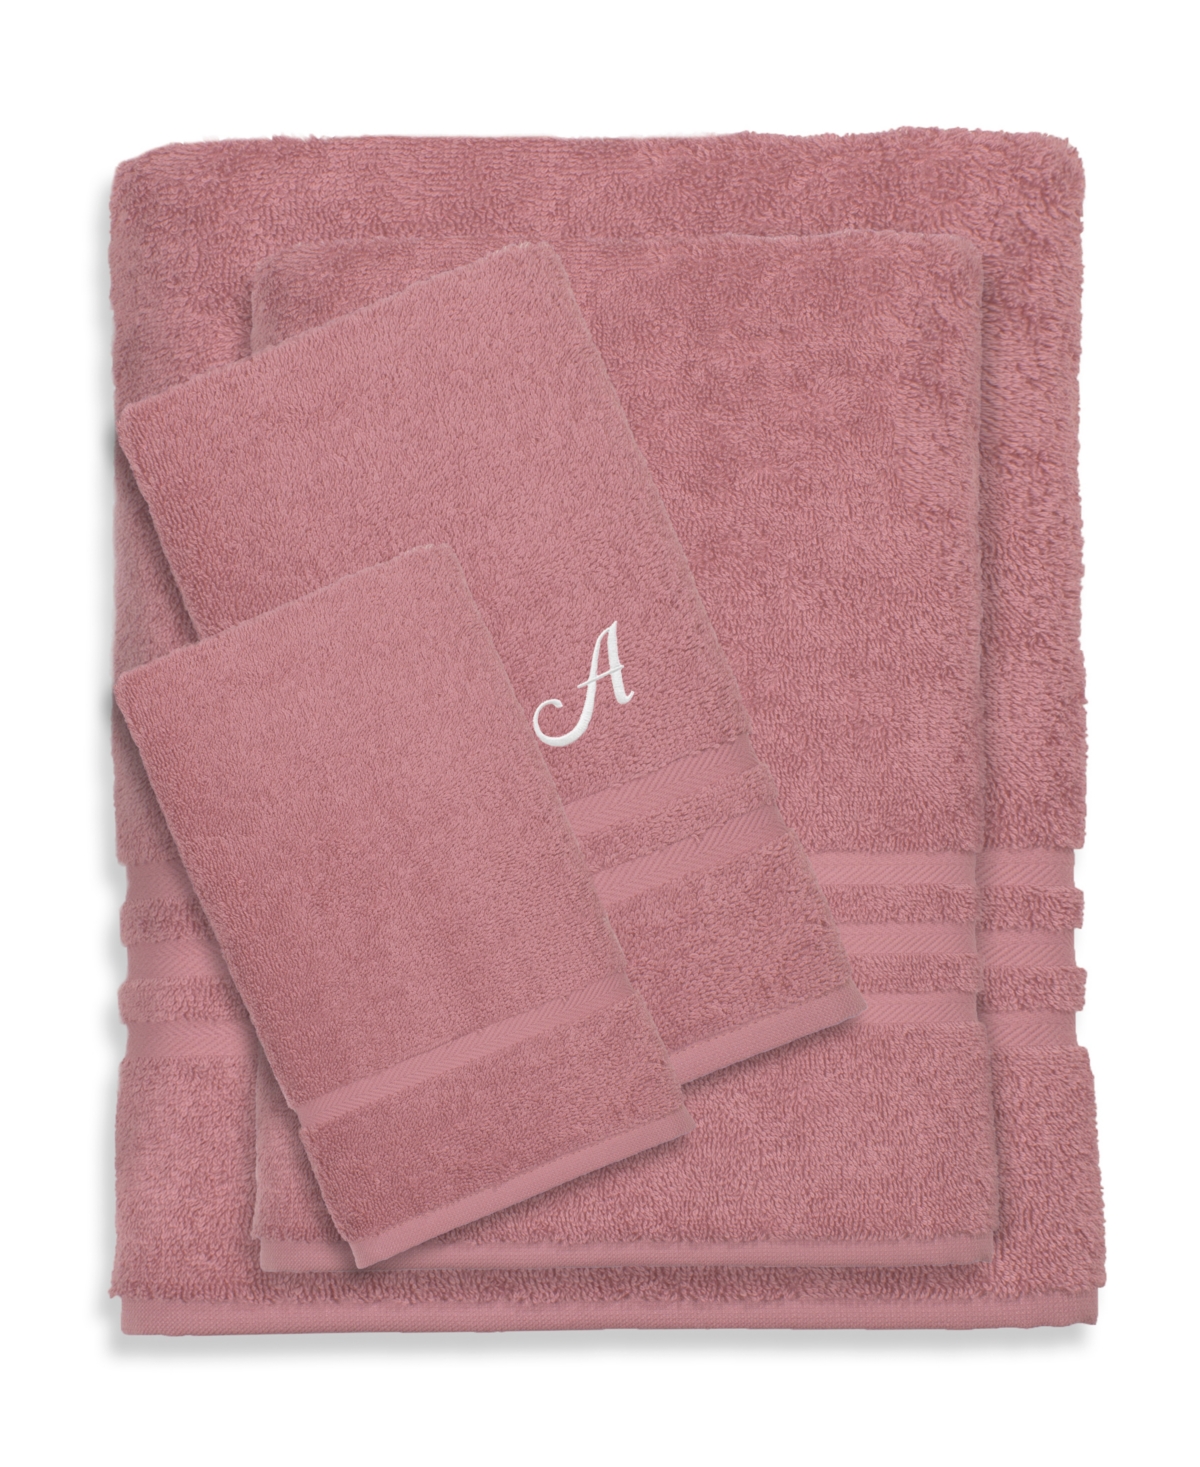 Linum Home Textiles Turkish Cotton Personalized Denzi Towel Set, 4 Piece In Pink